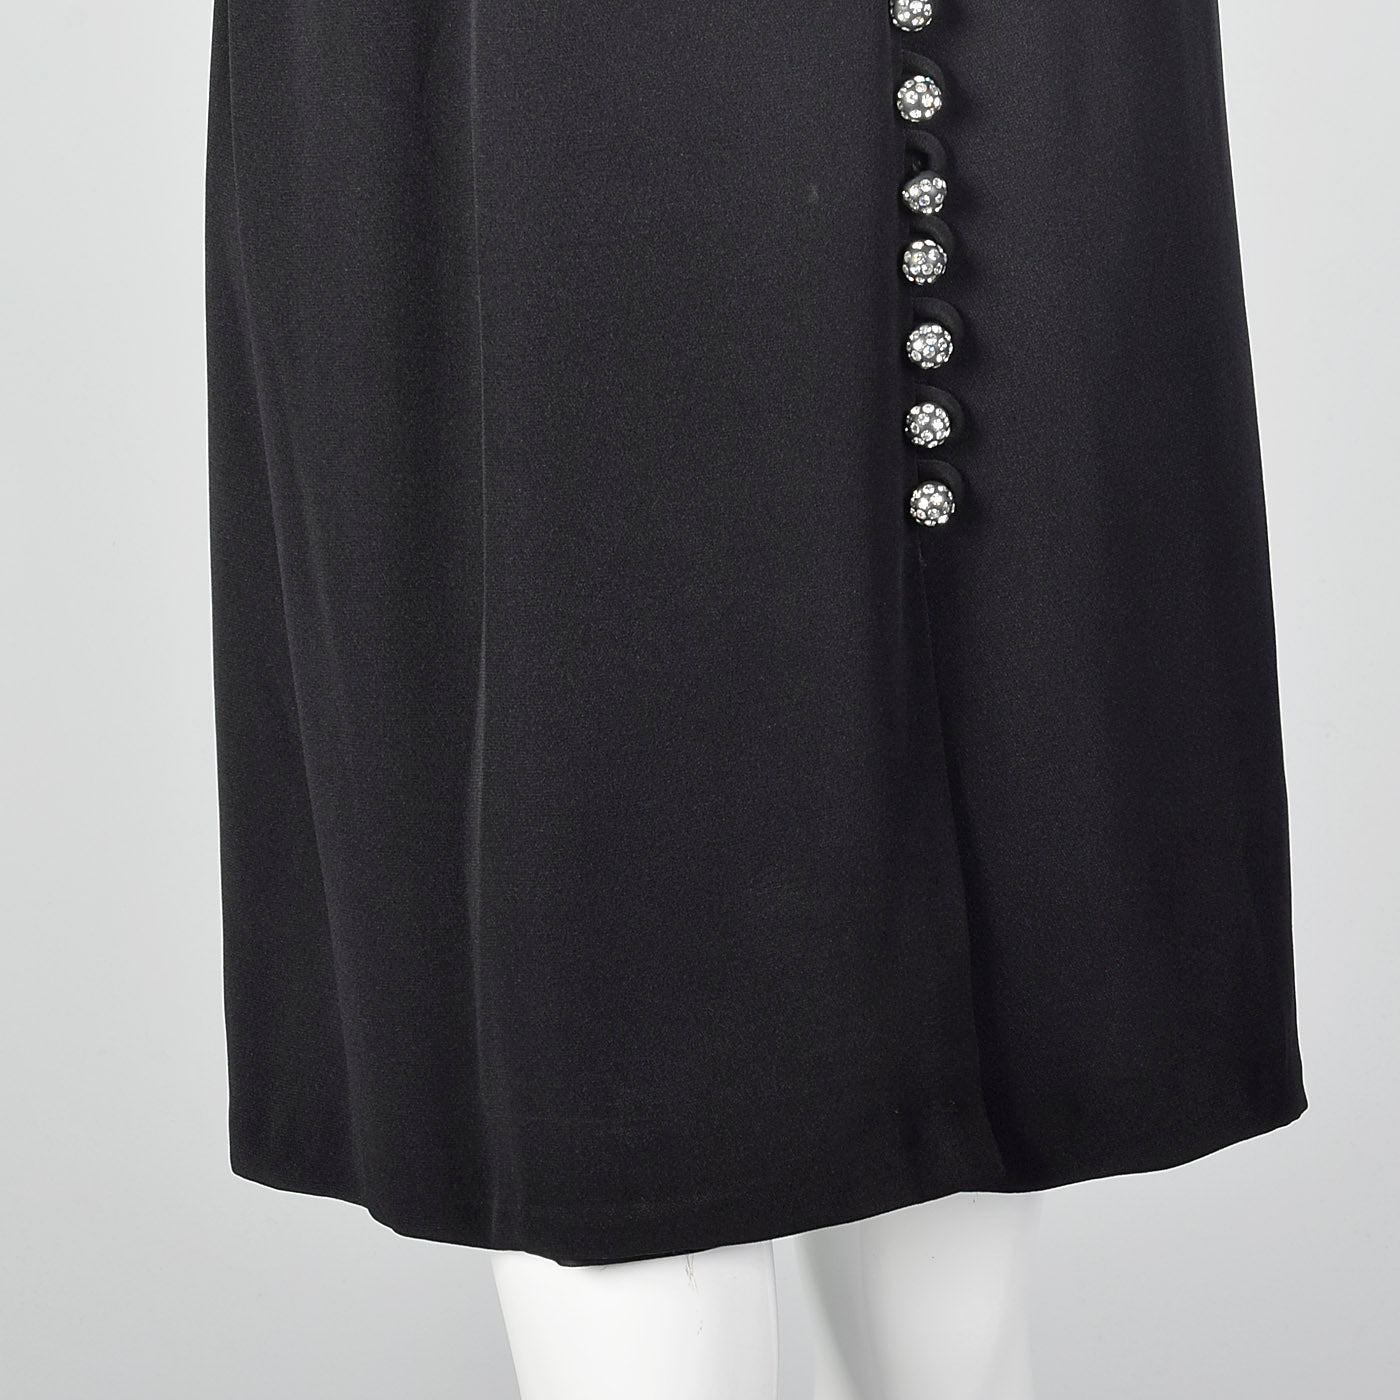 1960s Roger Milot Black Dress